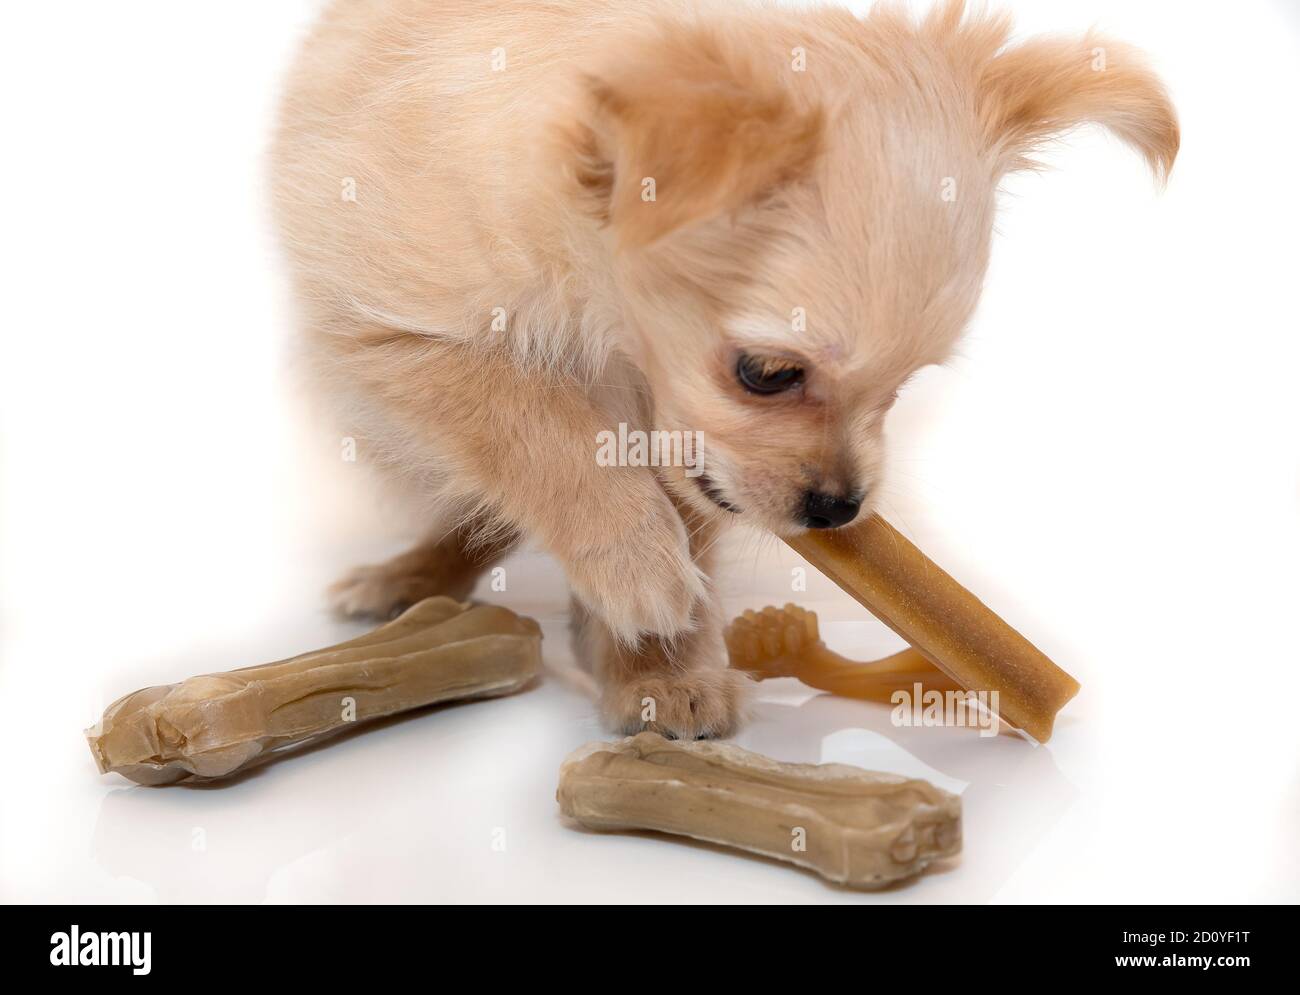 Dog chew bone and sticks. Beige puppy. Stock Photo